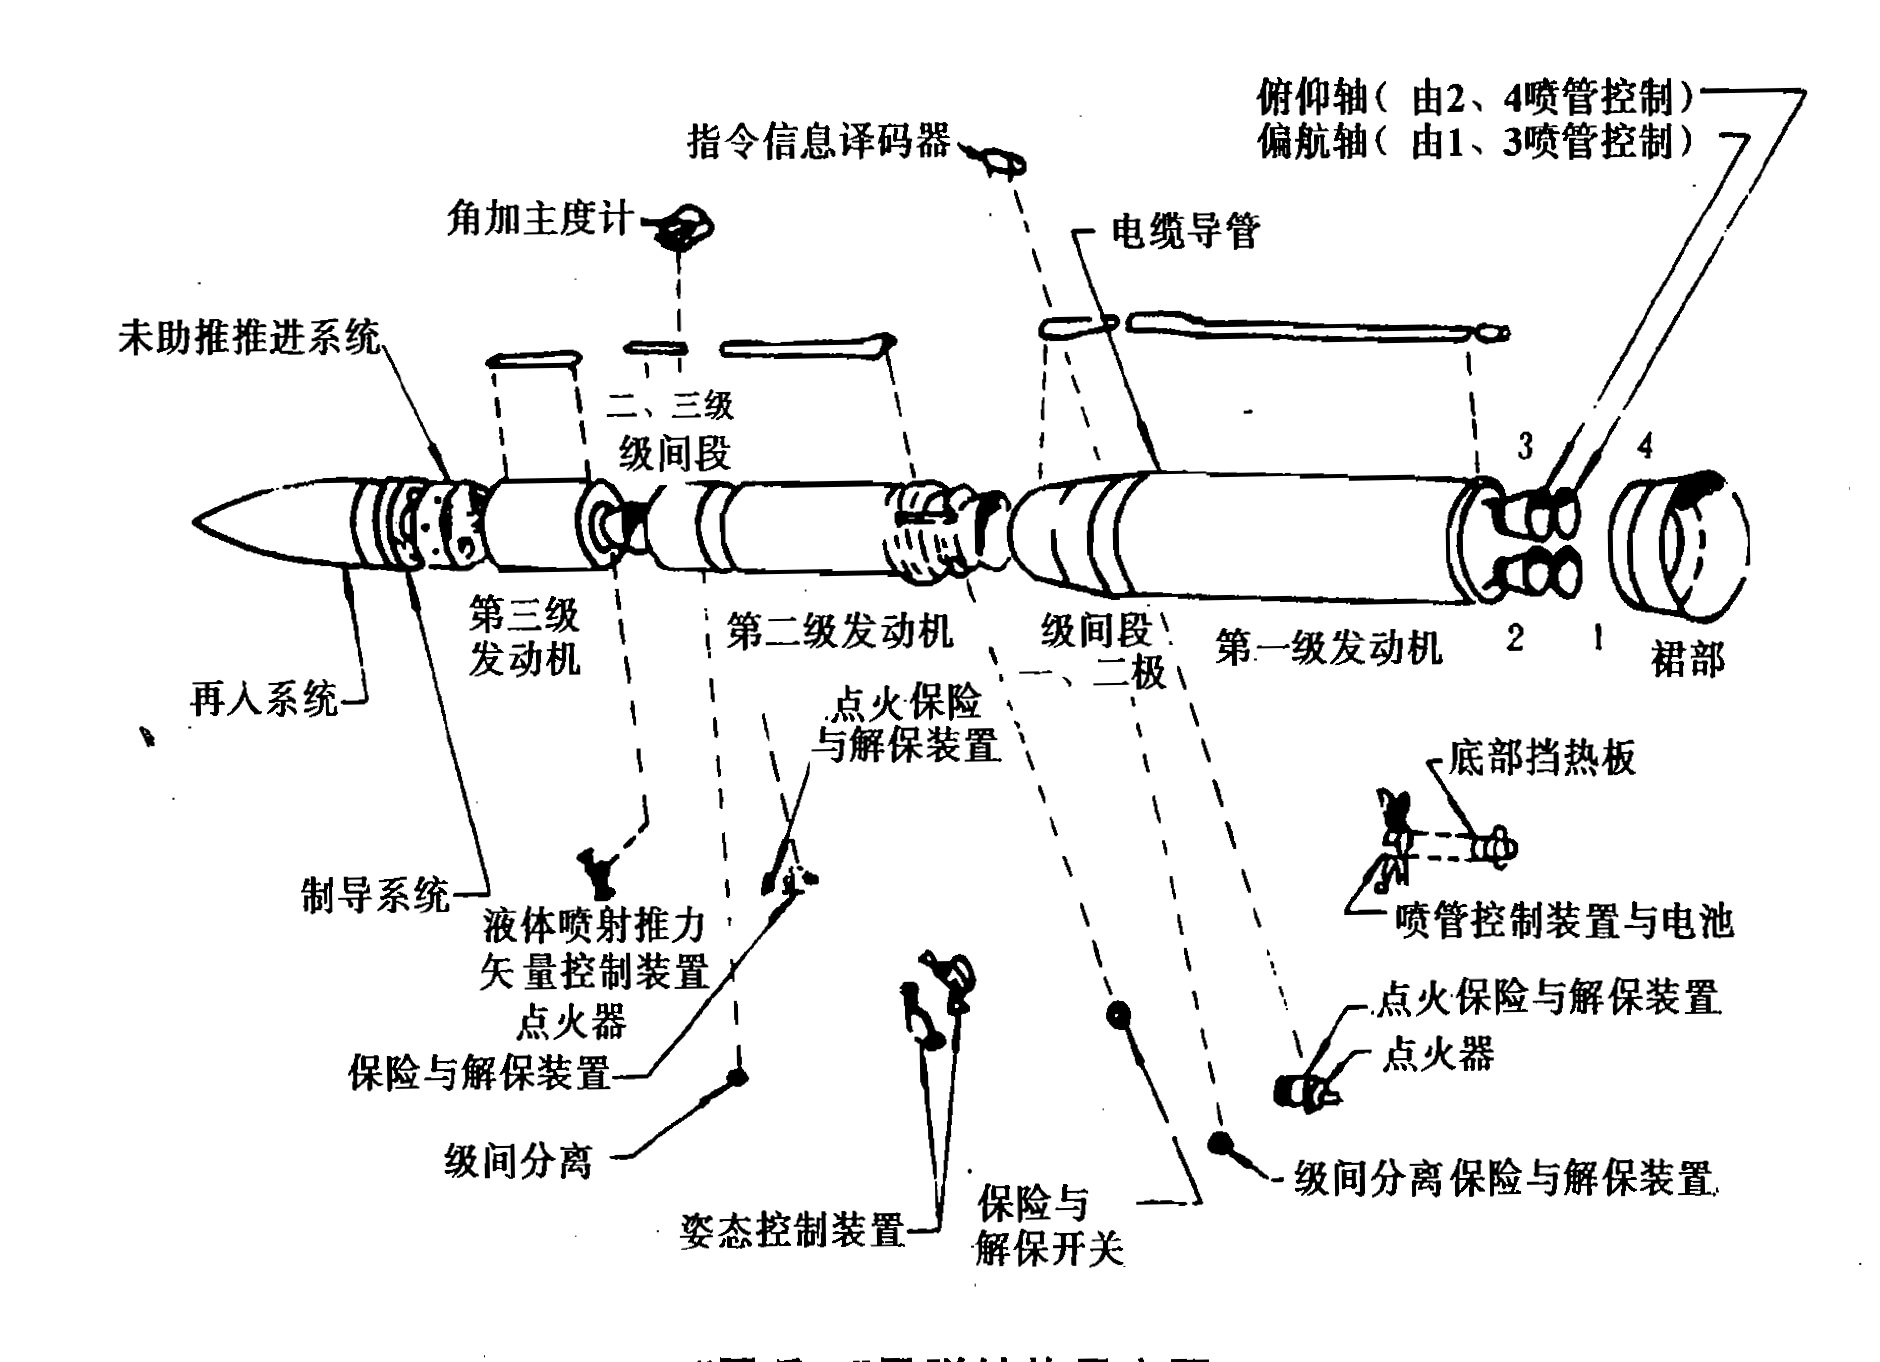 LGM-30G飛彈結構圖